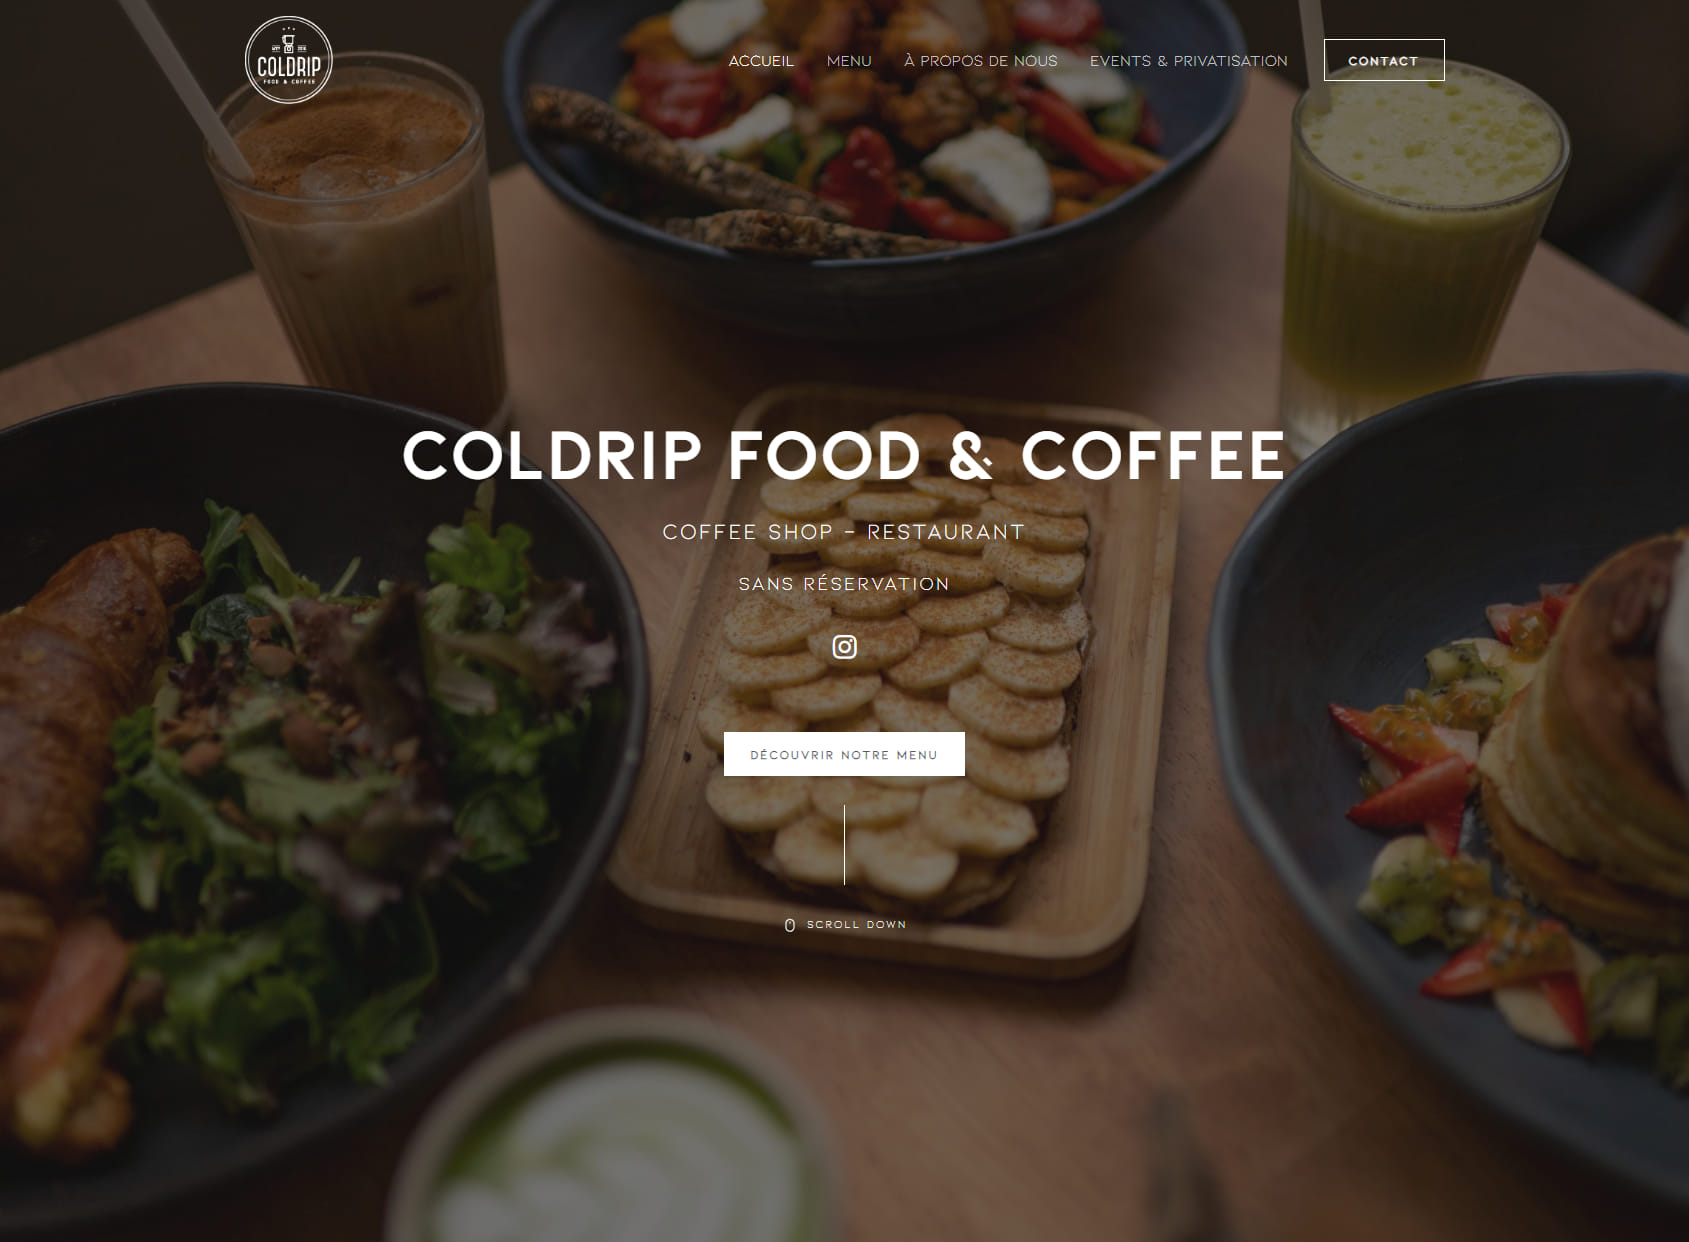 Coldrip food and coffee